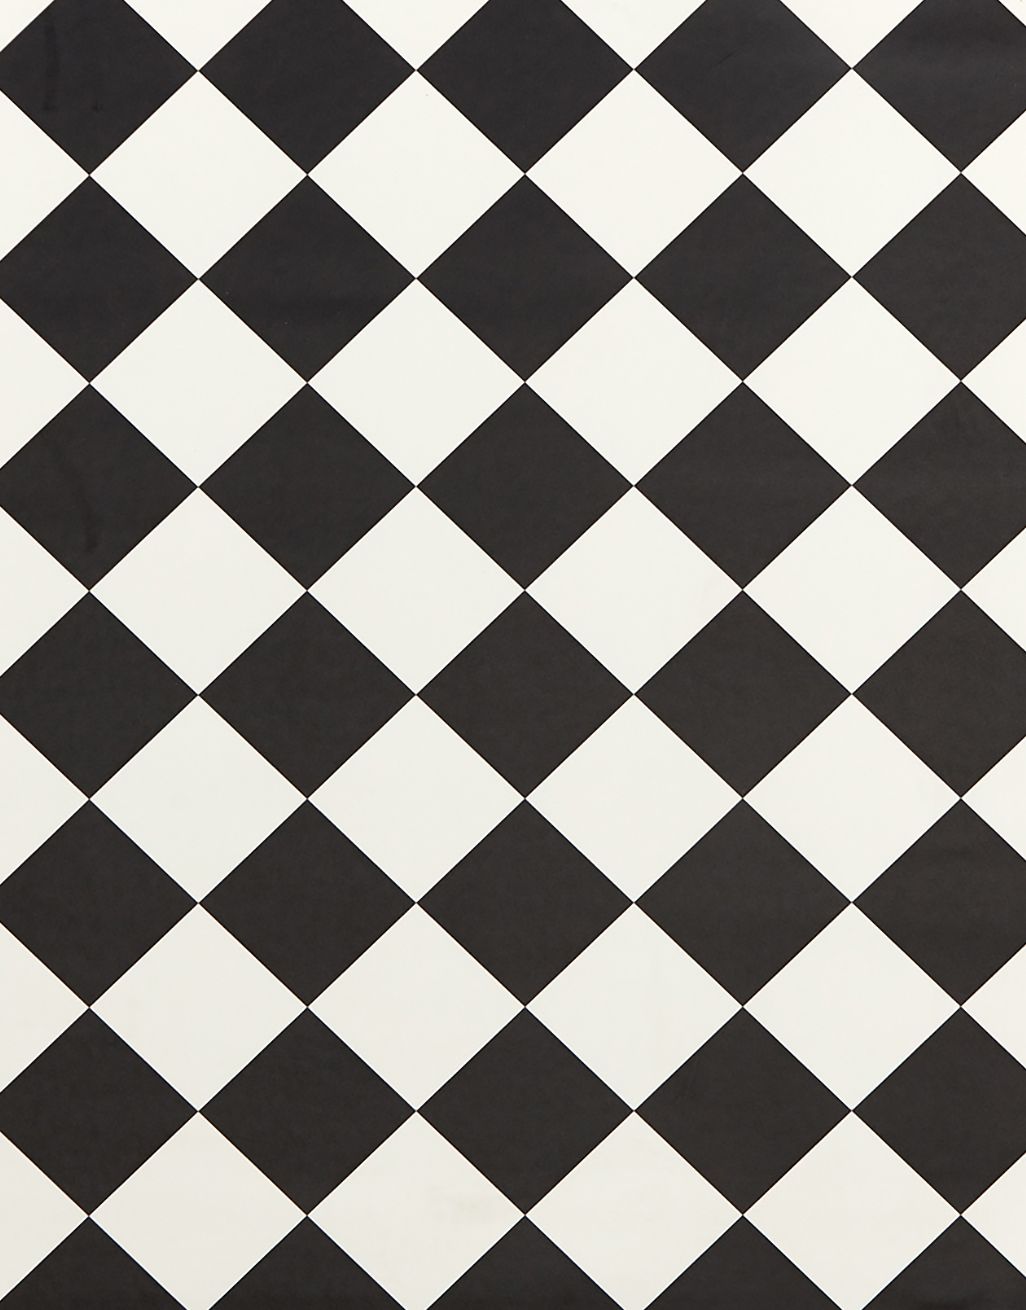 Monochrome - Chessboard [4.75m x 3m] 4